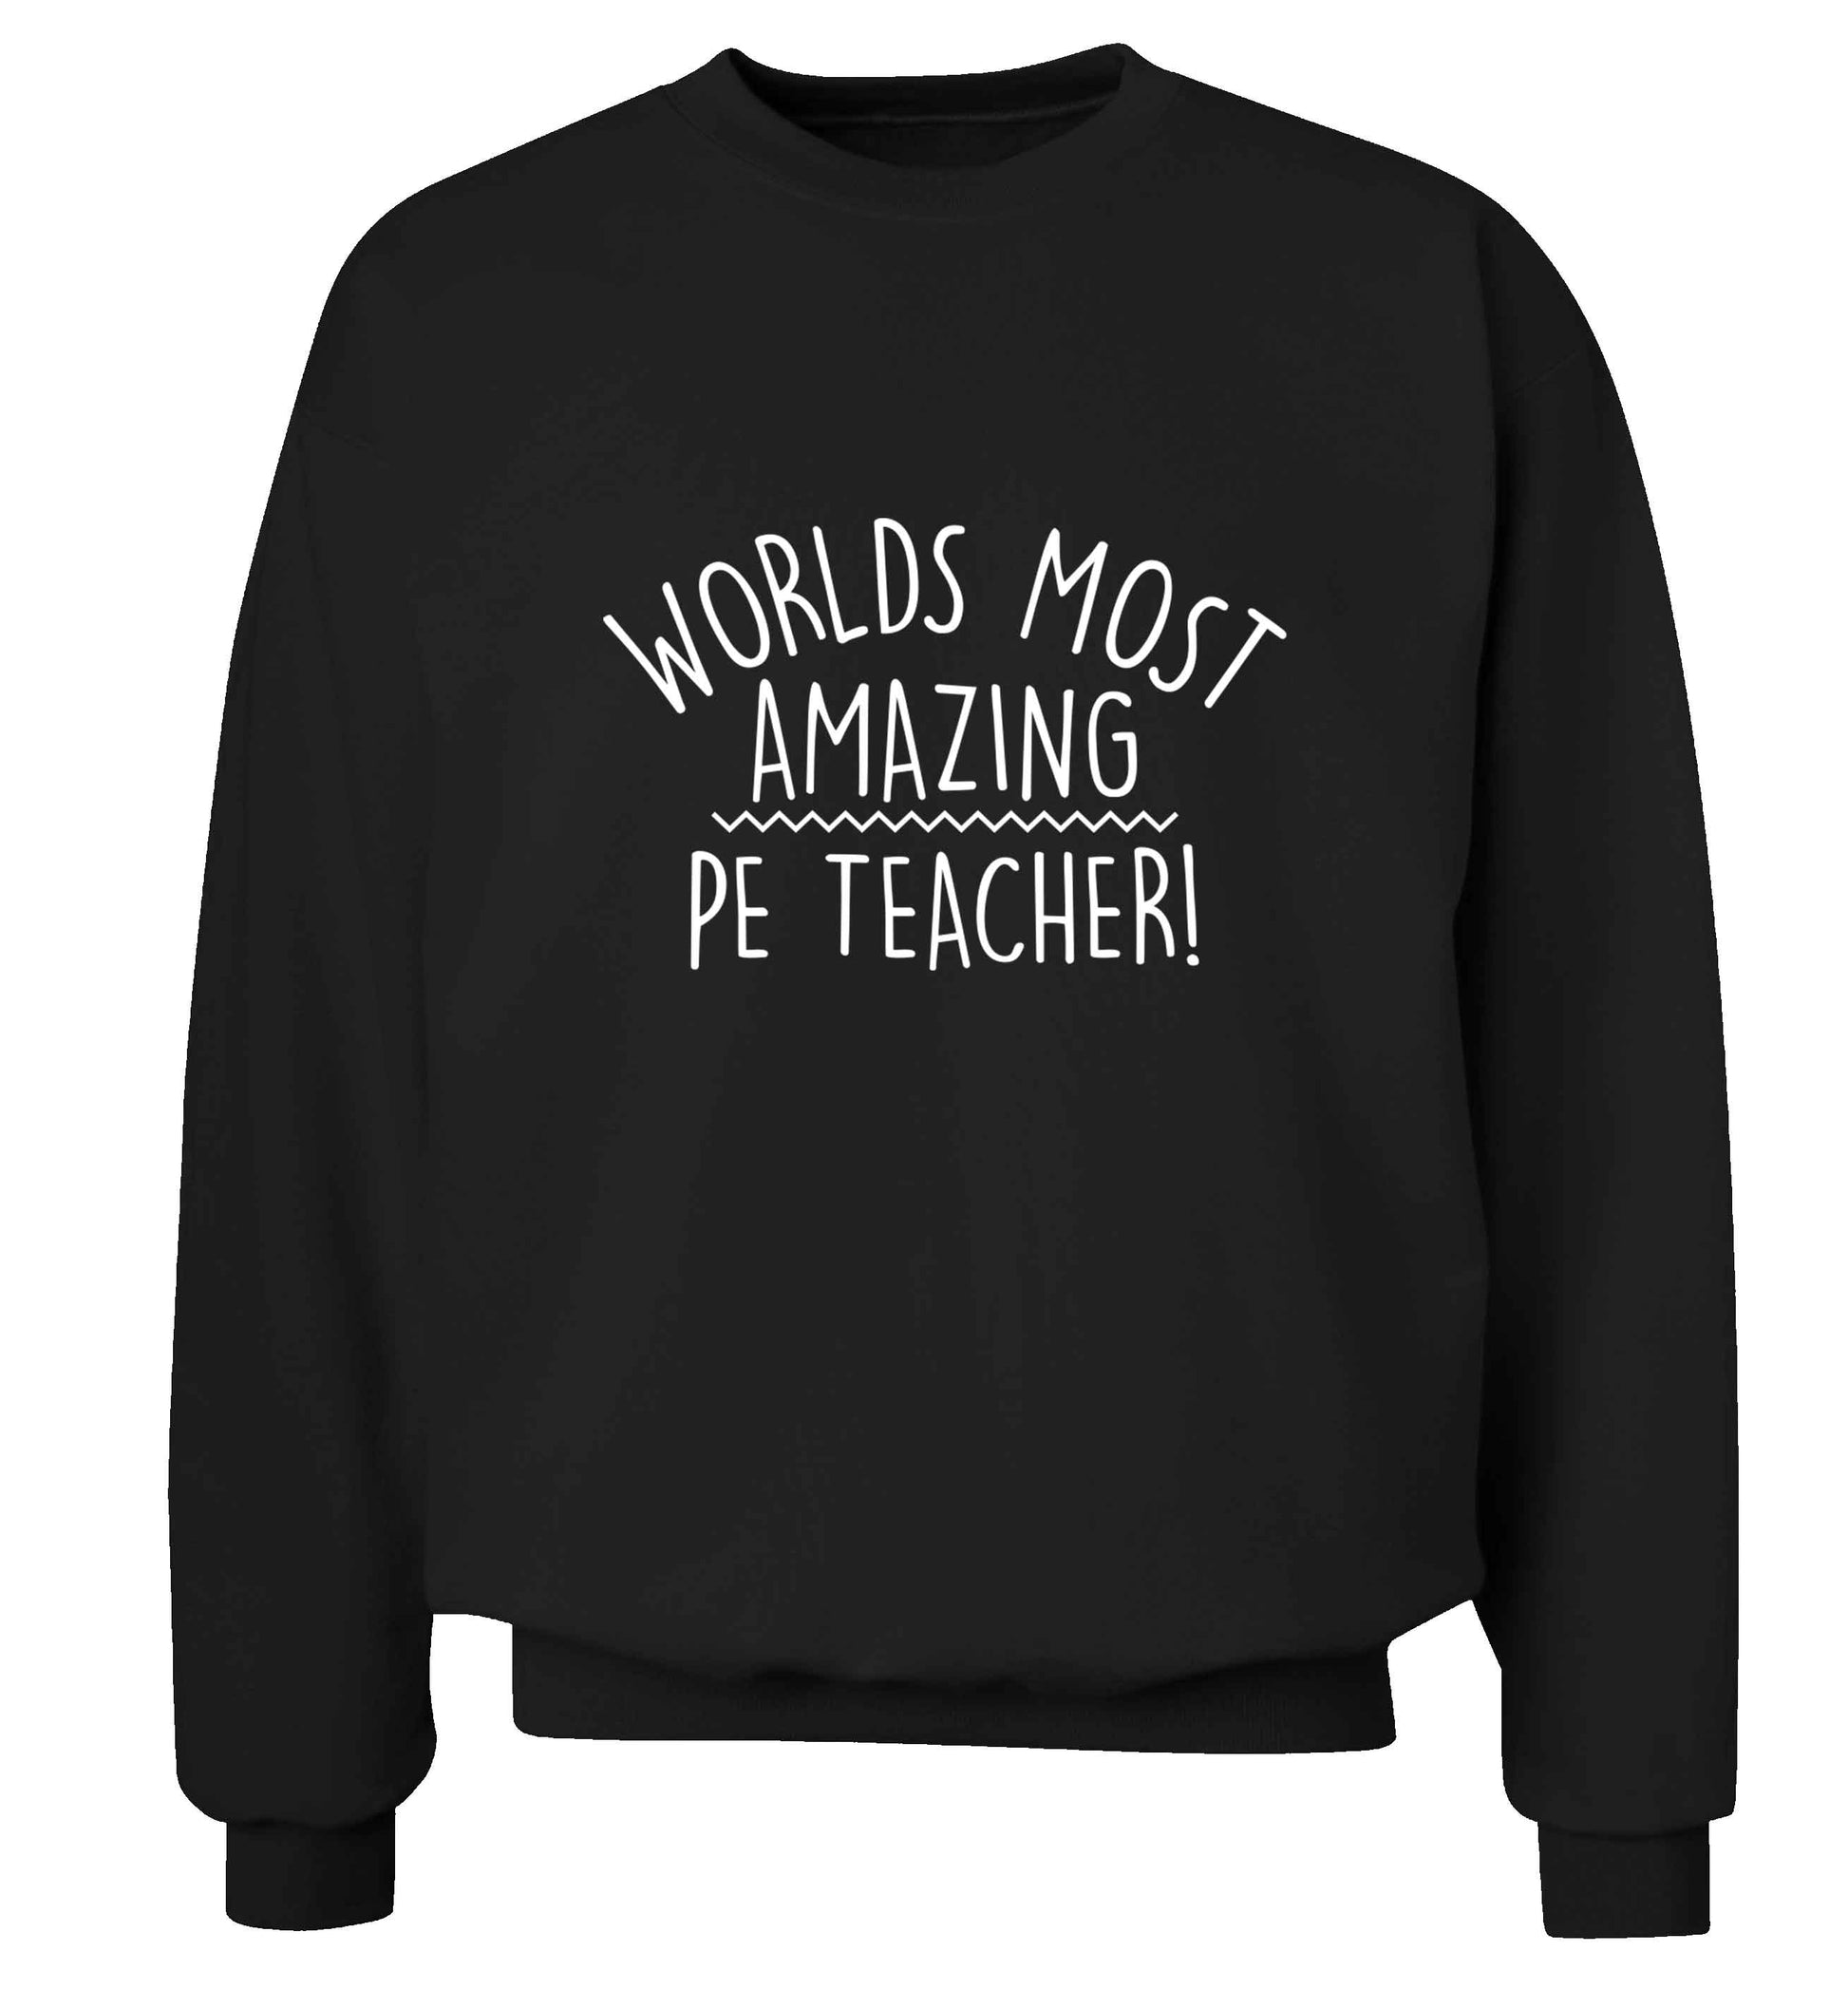 Worlds most amazing PE teacher adult's unisex black sweater 2XL